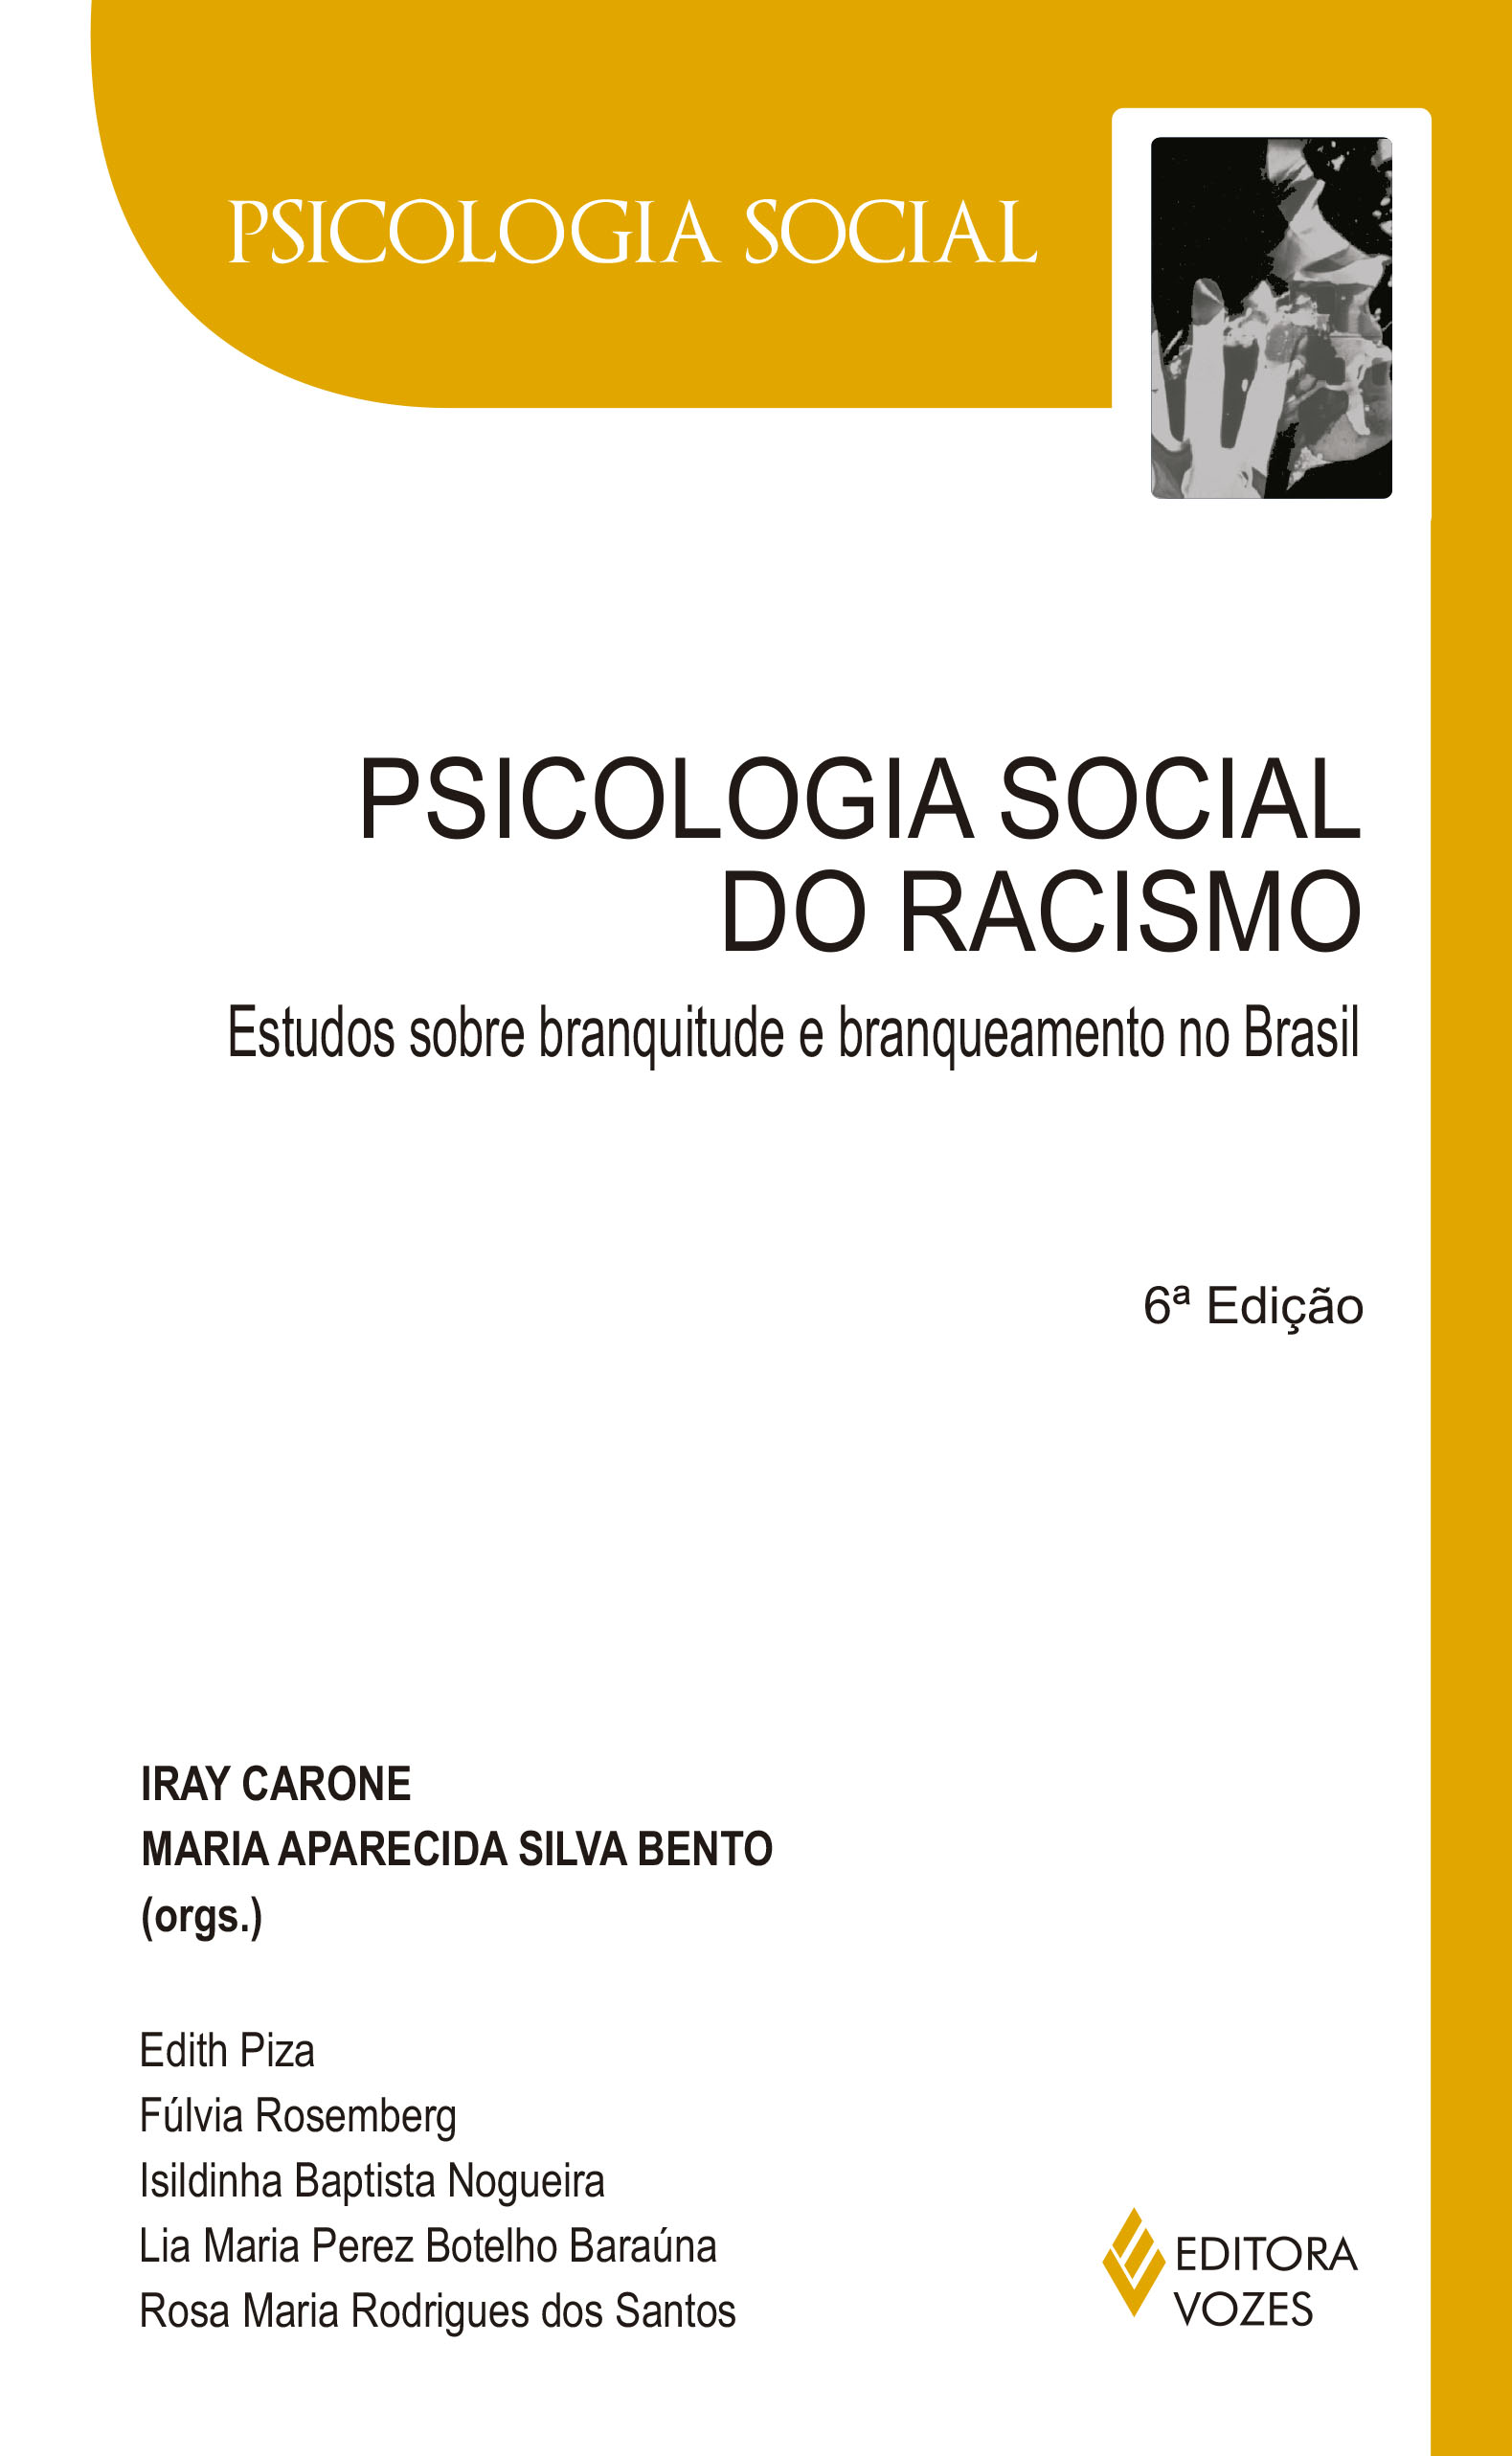 PSICOLOGIA SOCIAL DO RACISMO - ESTUDOS SOBRE BRANQUITUDE.